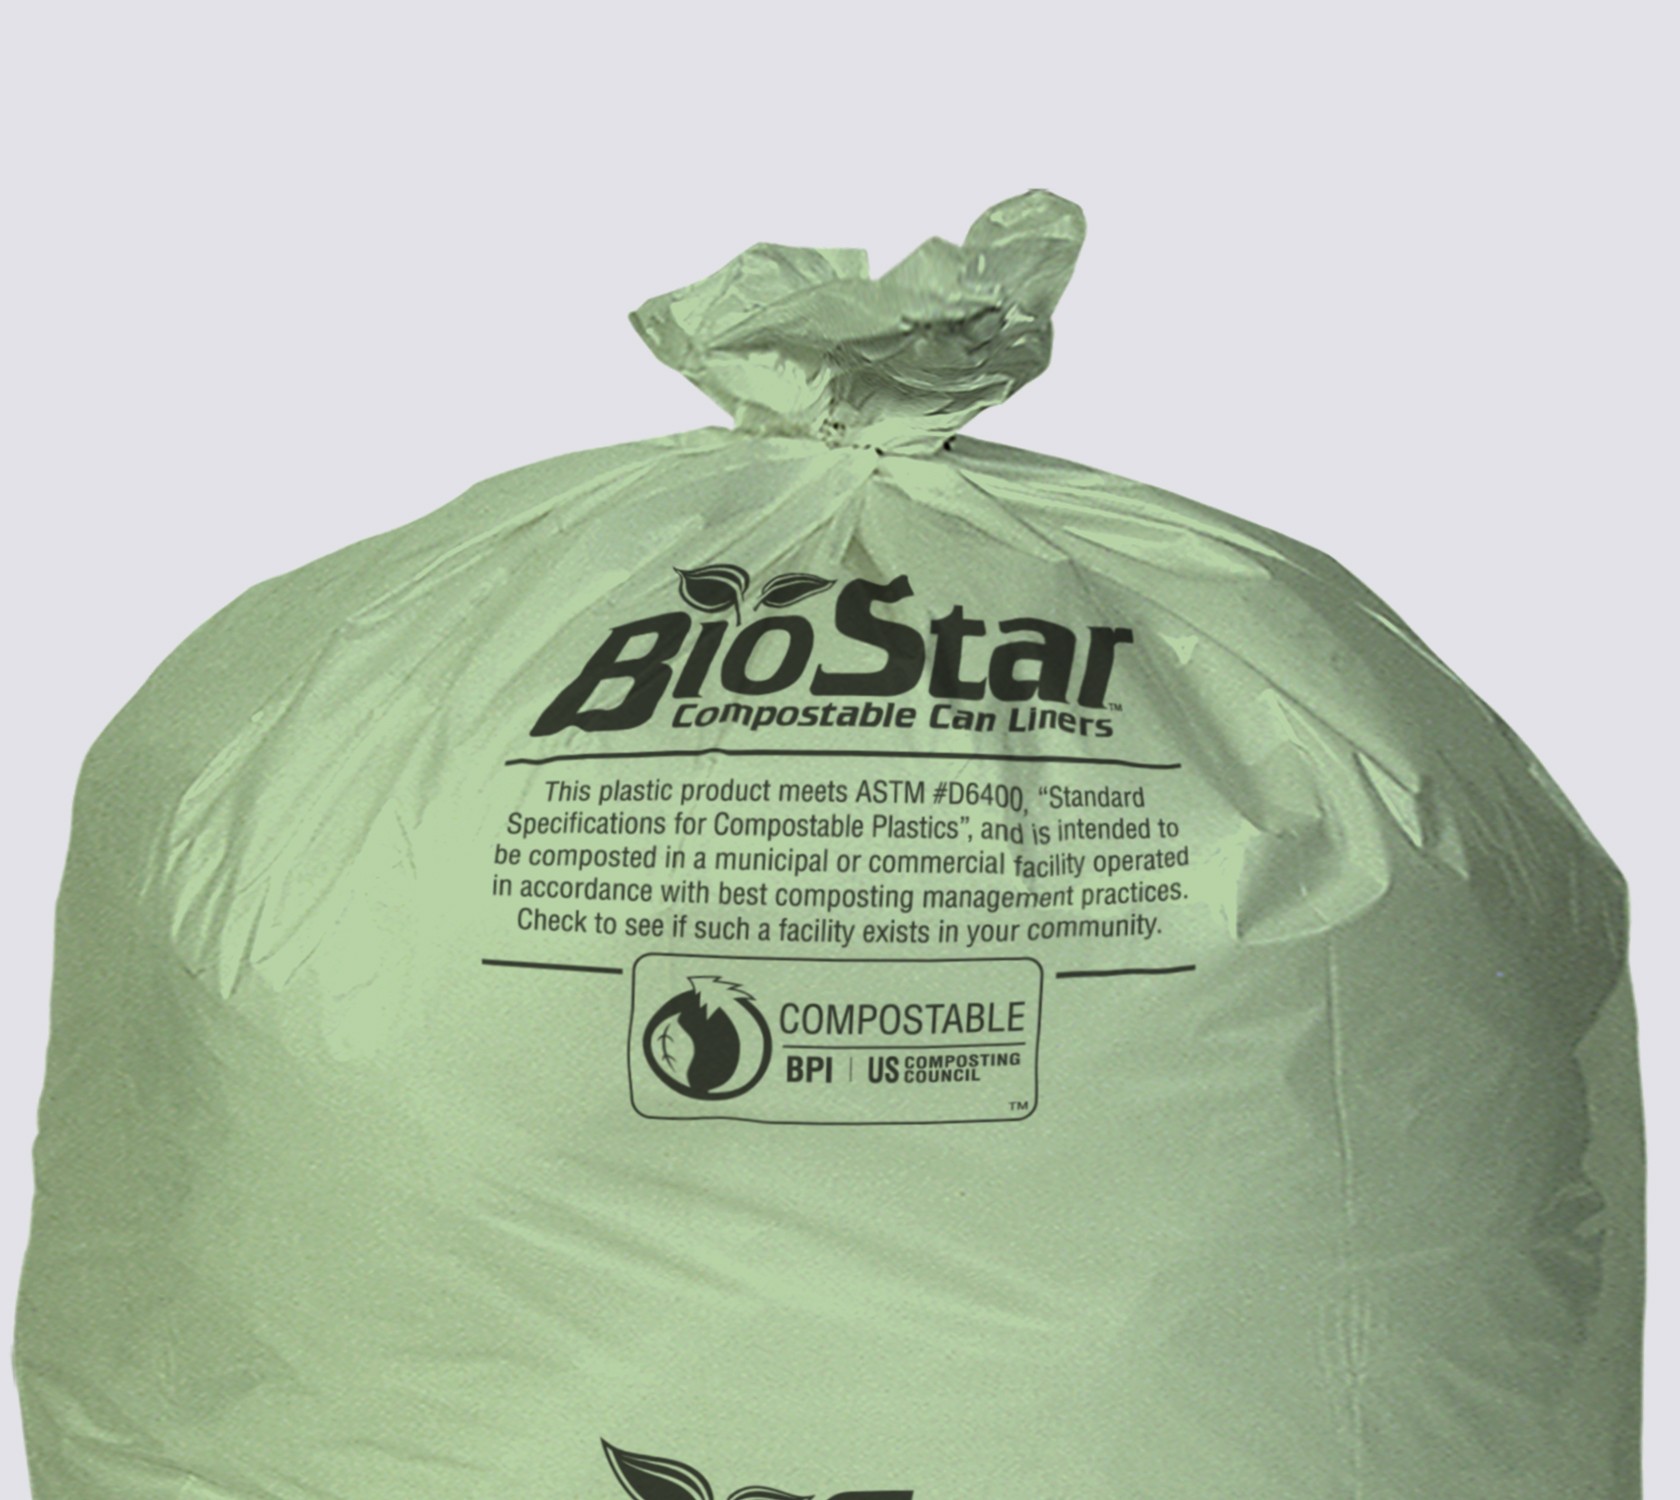 https://pittplastics.com/wp-content/uploads/2022/06/BioStar-Thumbnail-1.jpg